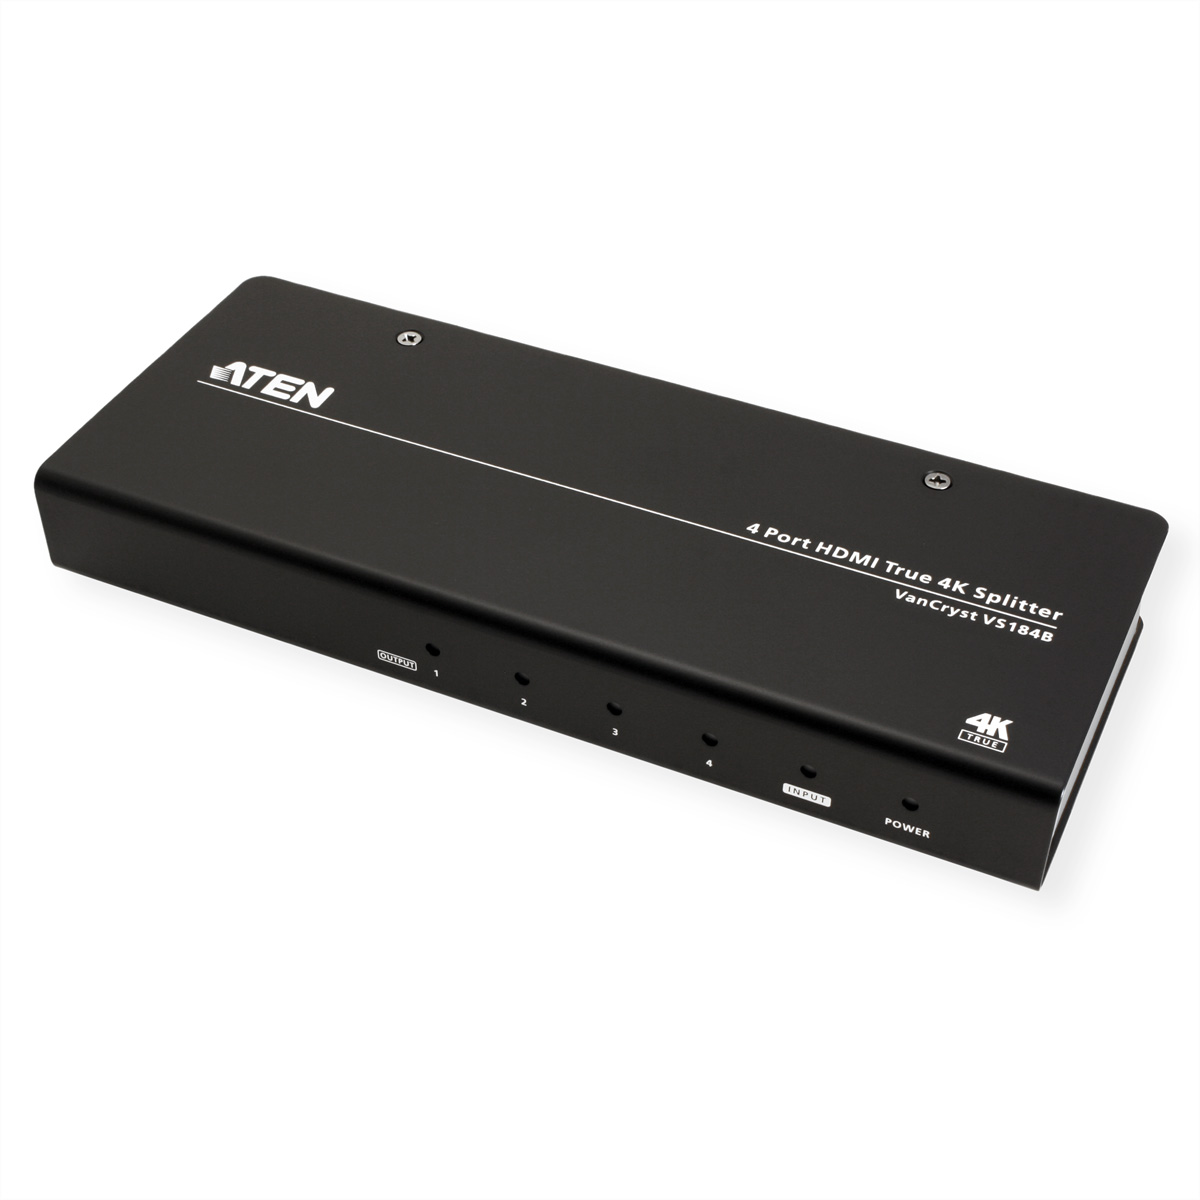 ATEN VS184B 4-Port HDMI Splitter HDMI-Video-Splitter 4K/2K True